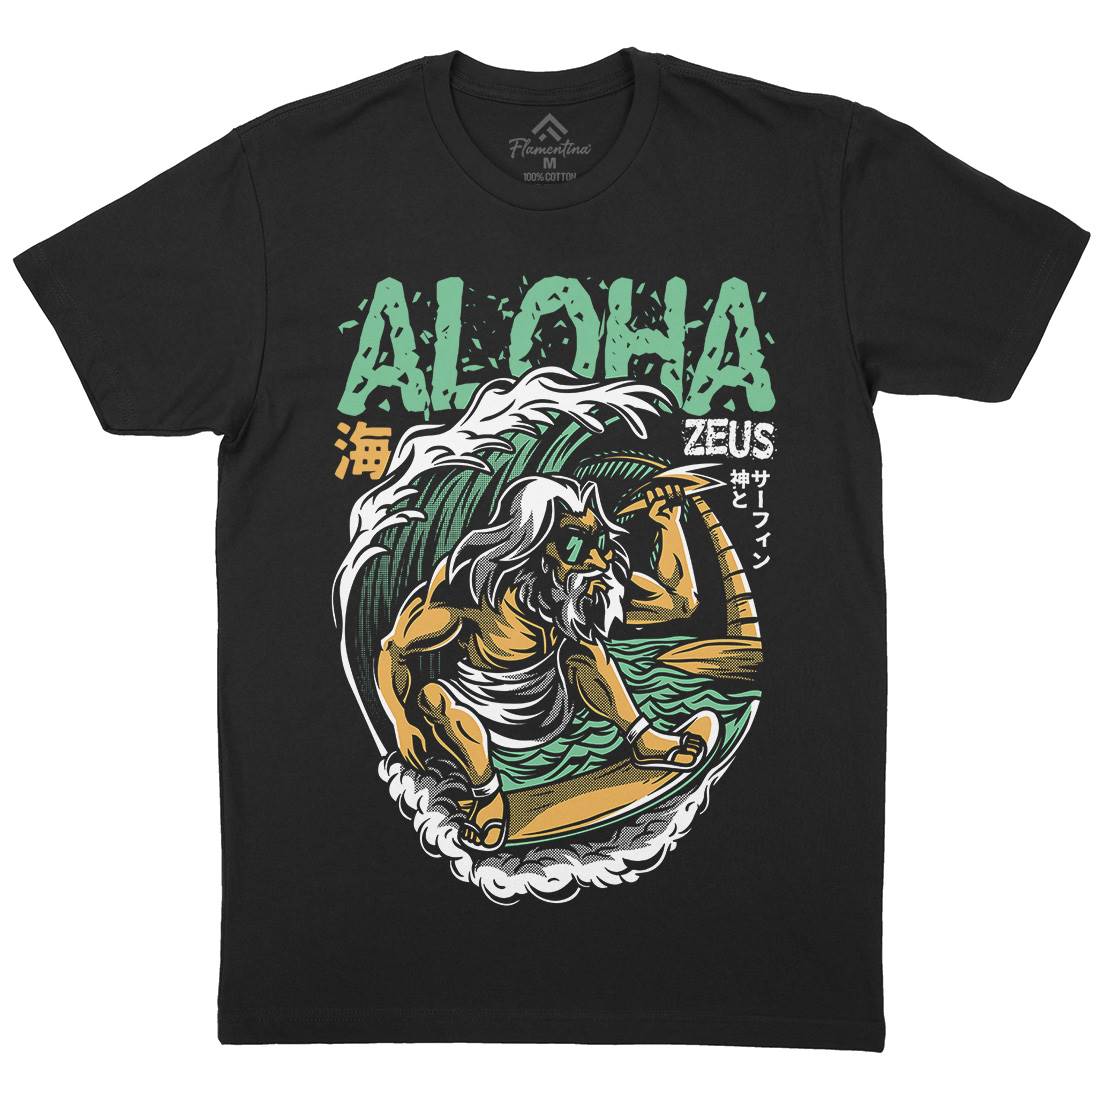 Aloha Zeus Mens Organic Crew Neck T-Shirt Surf D703